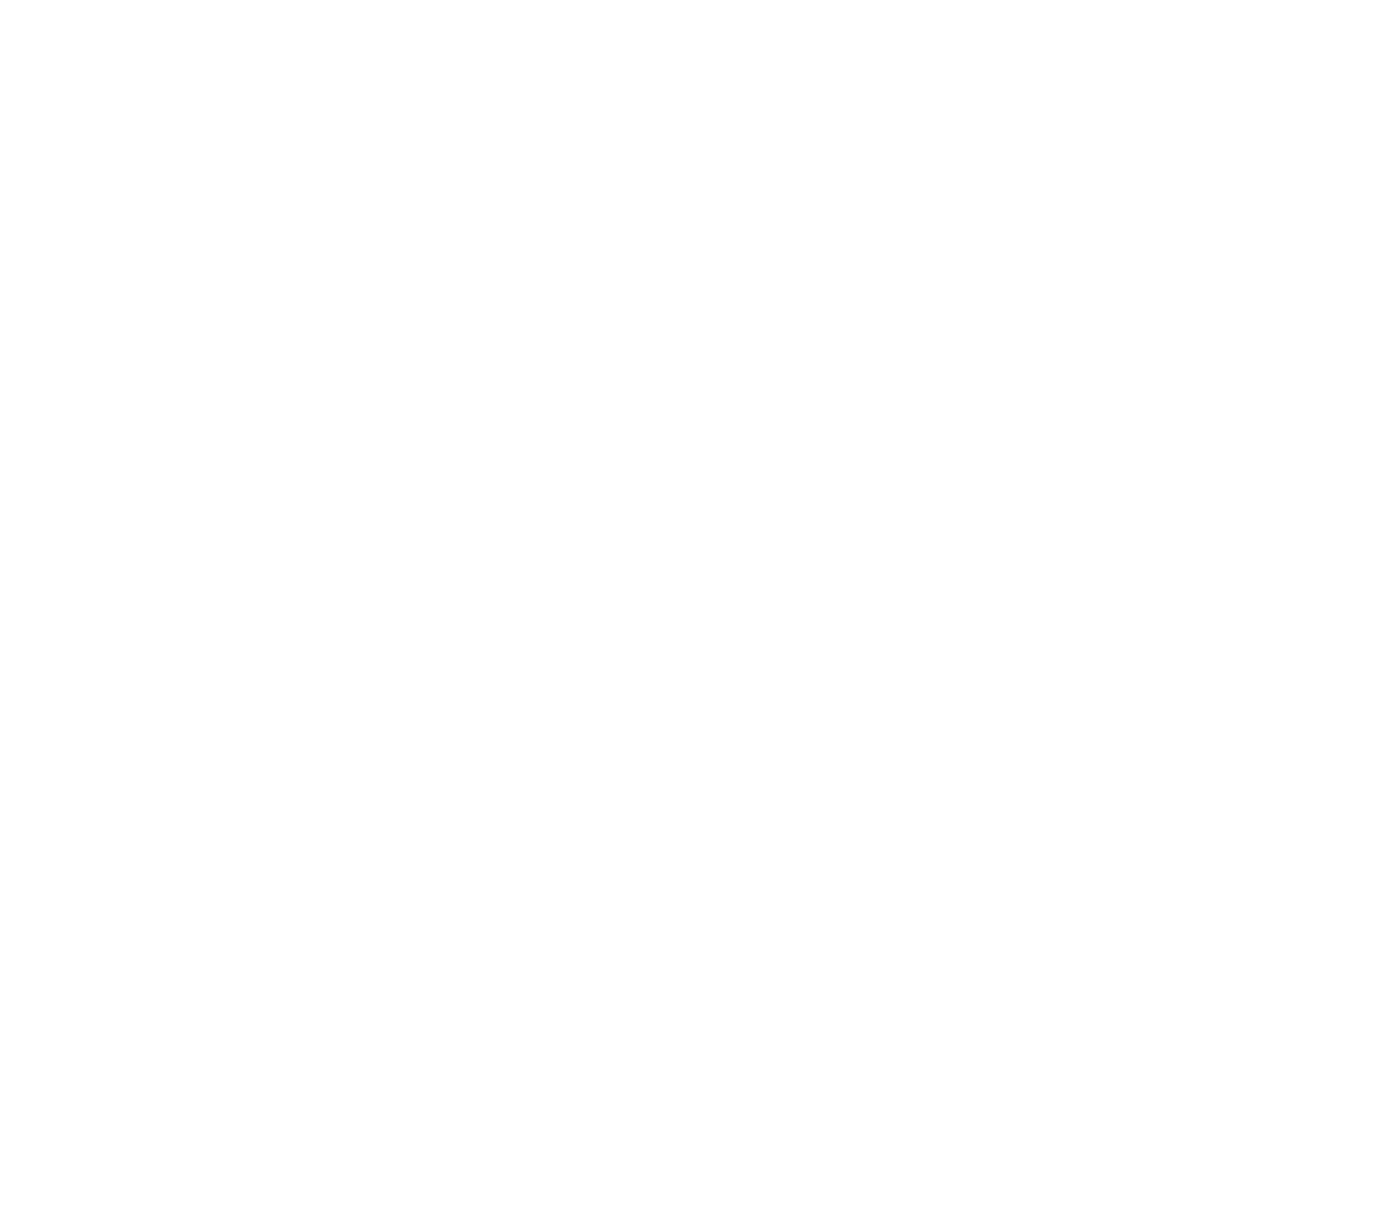 Mastering global transactions